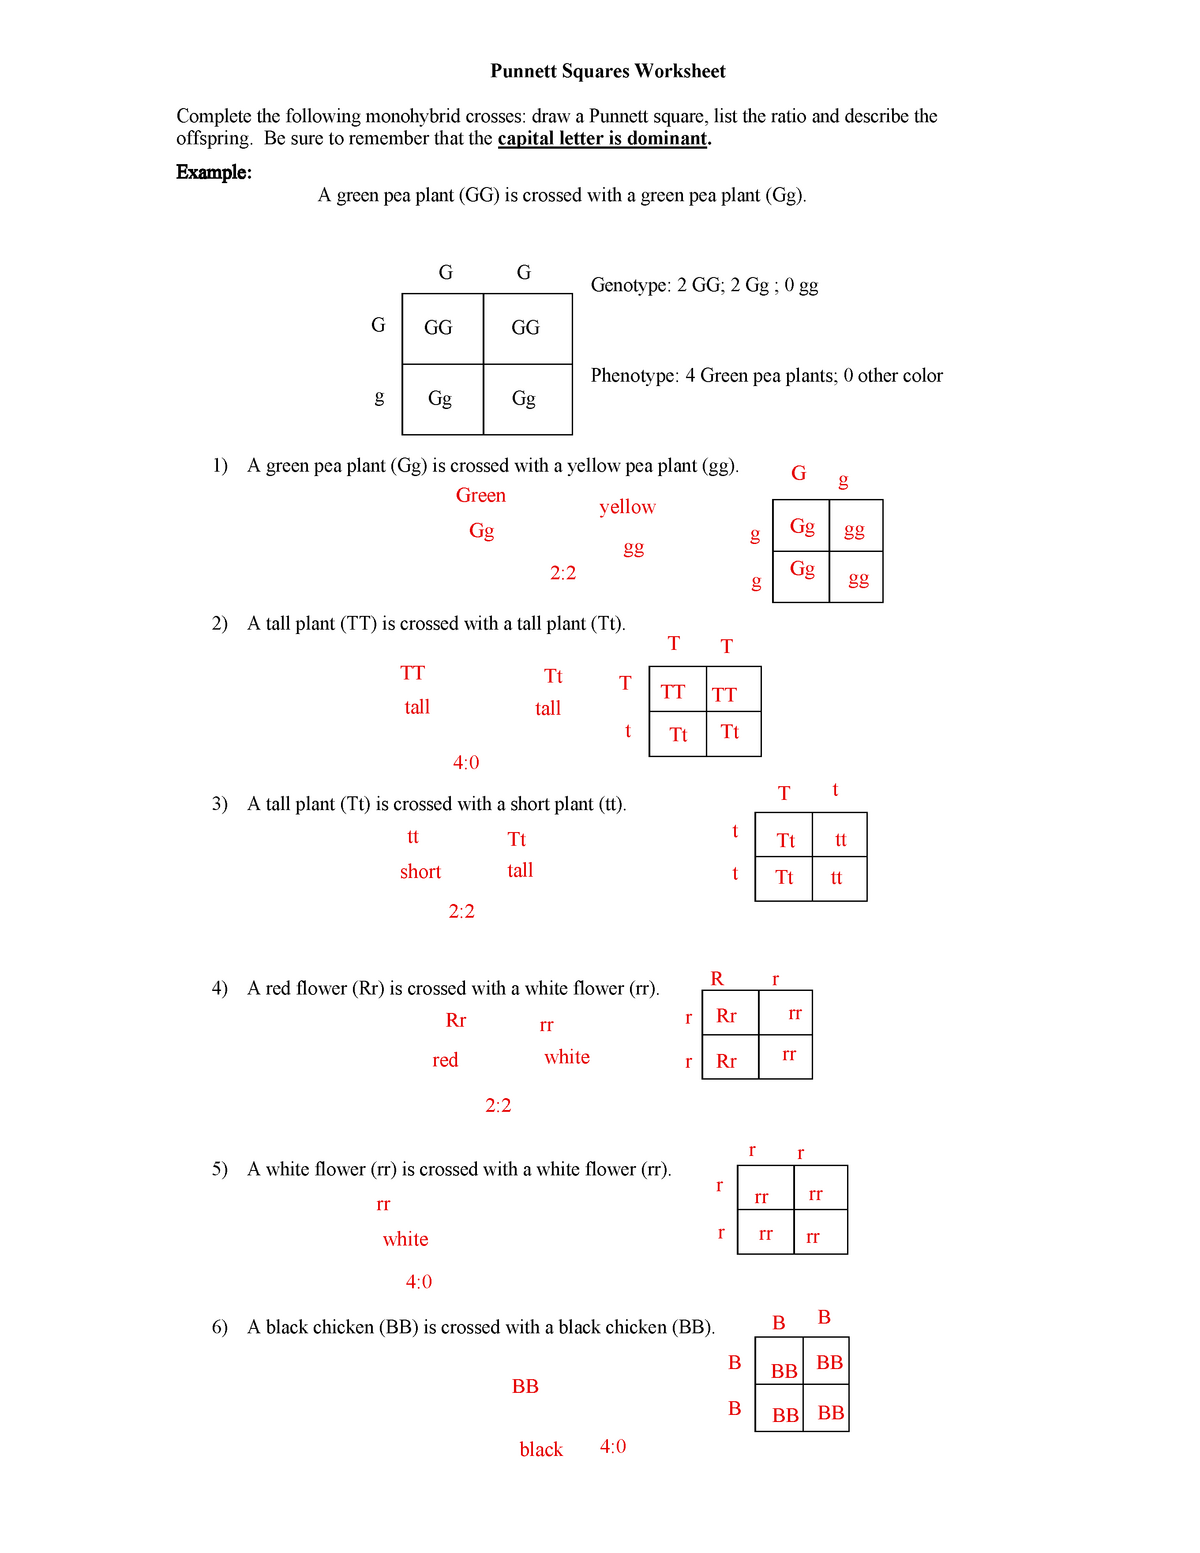 Monohybrid Cross Problems gizmo jqwpdqwk - DEV BIO 20B - Cell Inside Monohybrid Cross Practice Problems Worksheet